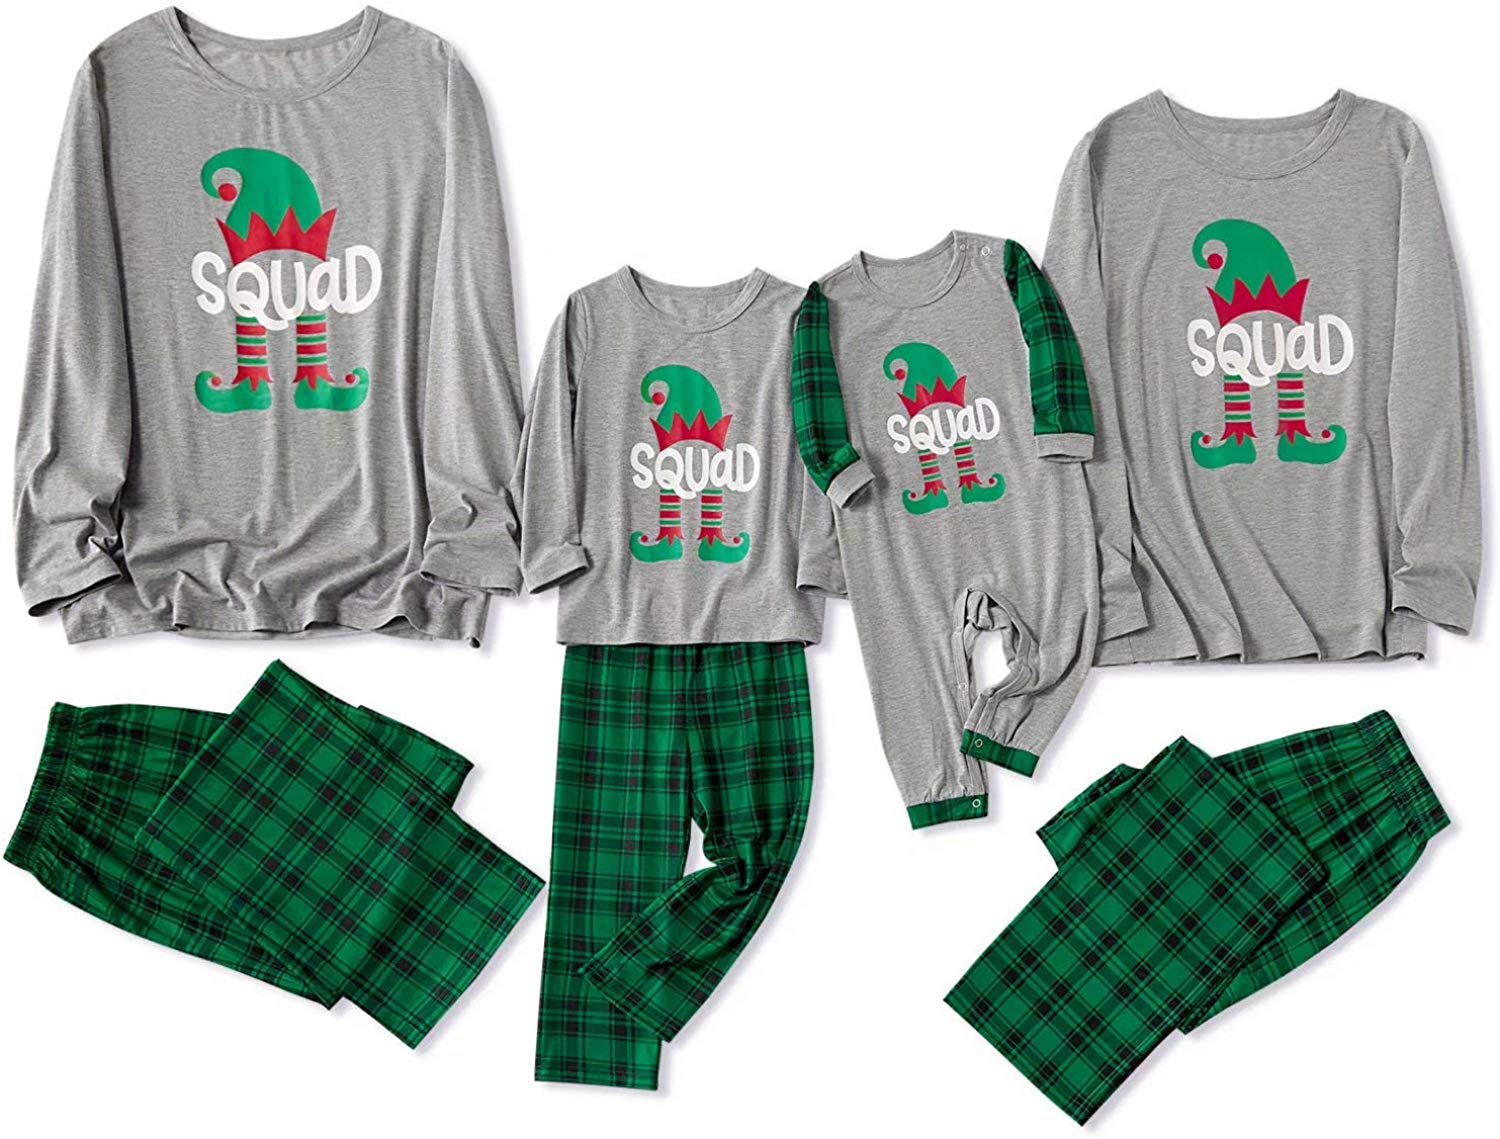 IFFEI Family Christmas Pajamas Matching Sets PJ's Sleepwear Printed Top and Plaid Pants with Pockets